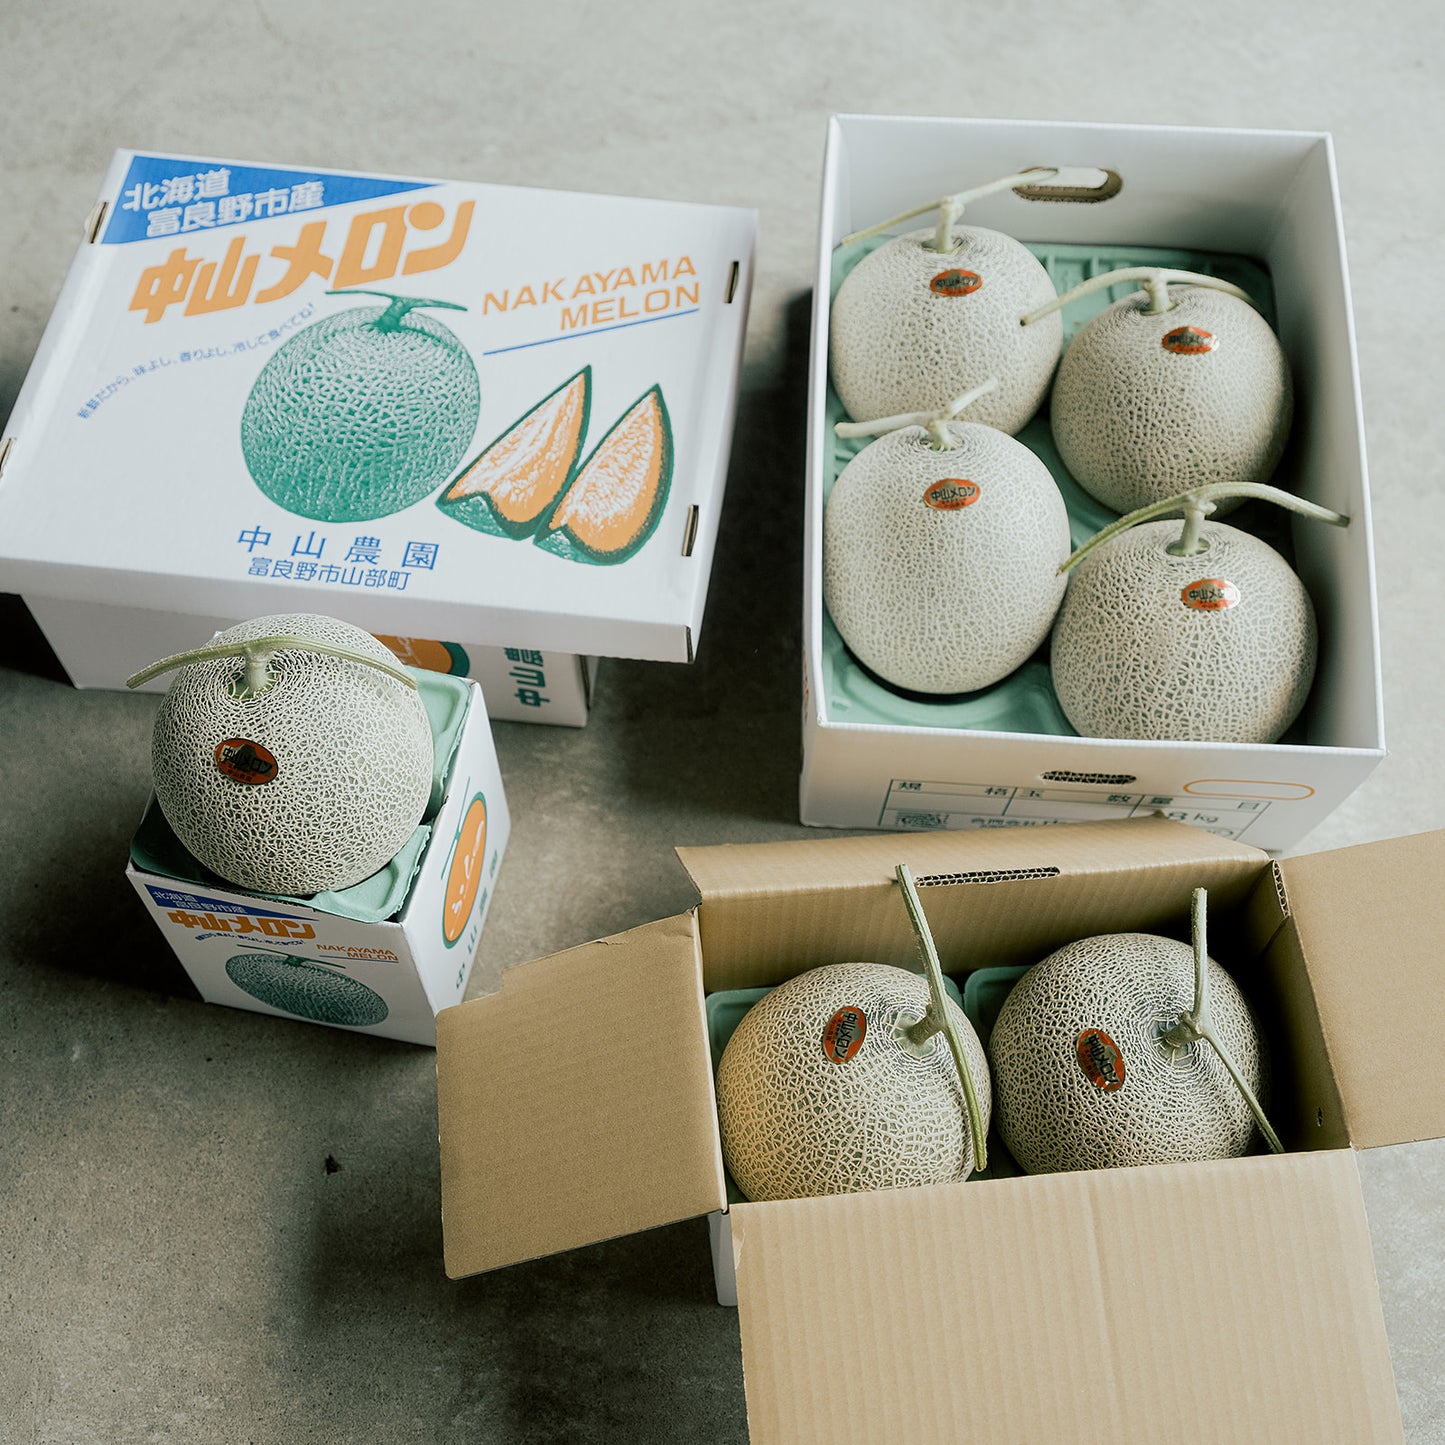 Furano Melon 2.0kg(incl Shipping)